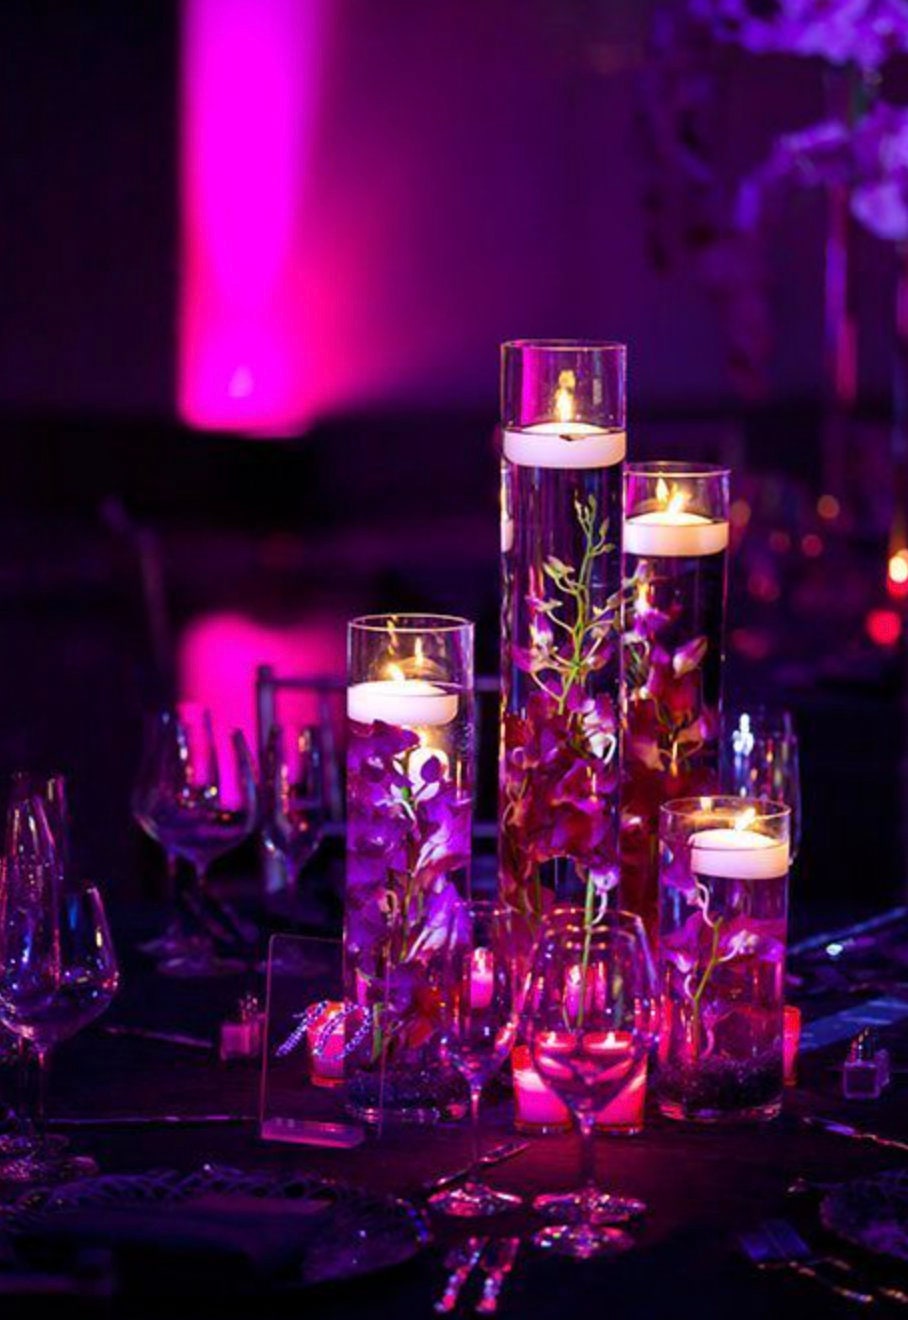 6 Cylinder Glass Vases Hurricane Vase Wholesale Centerpieces Table Decorations Event Wedding Reception Aisle Decor Candle Holders Free Ship